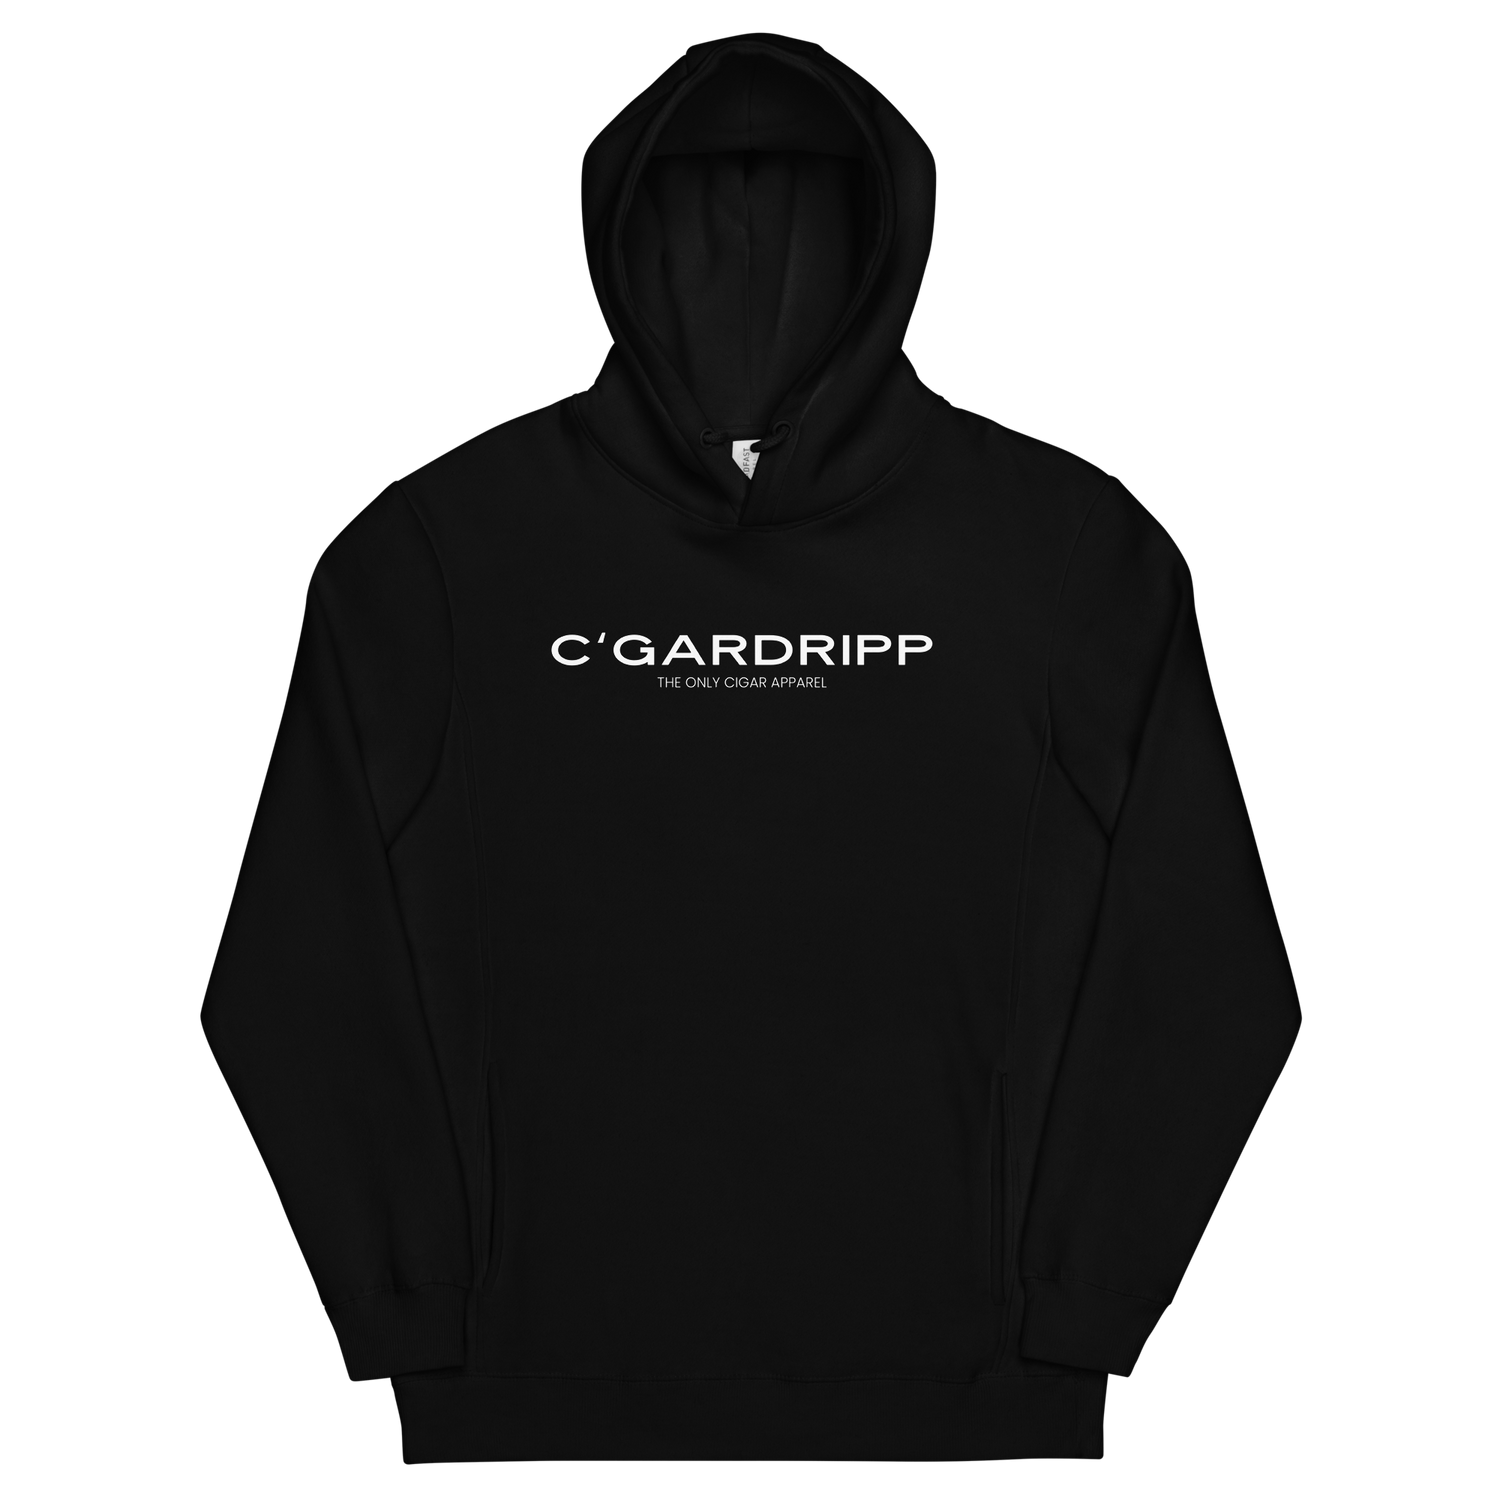 The C’GarDripp Collection